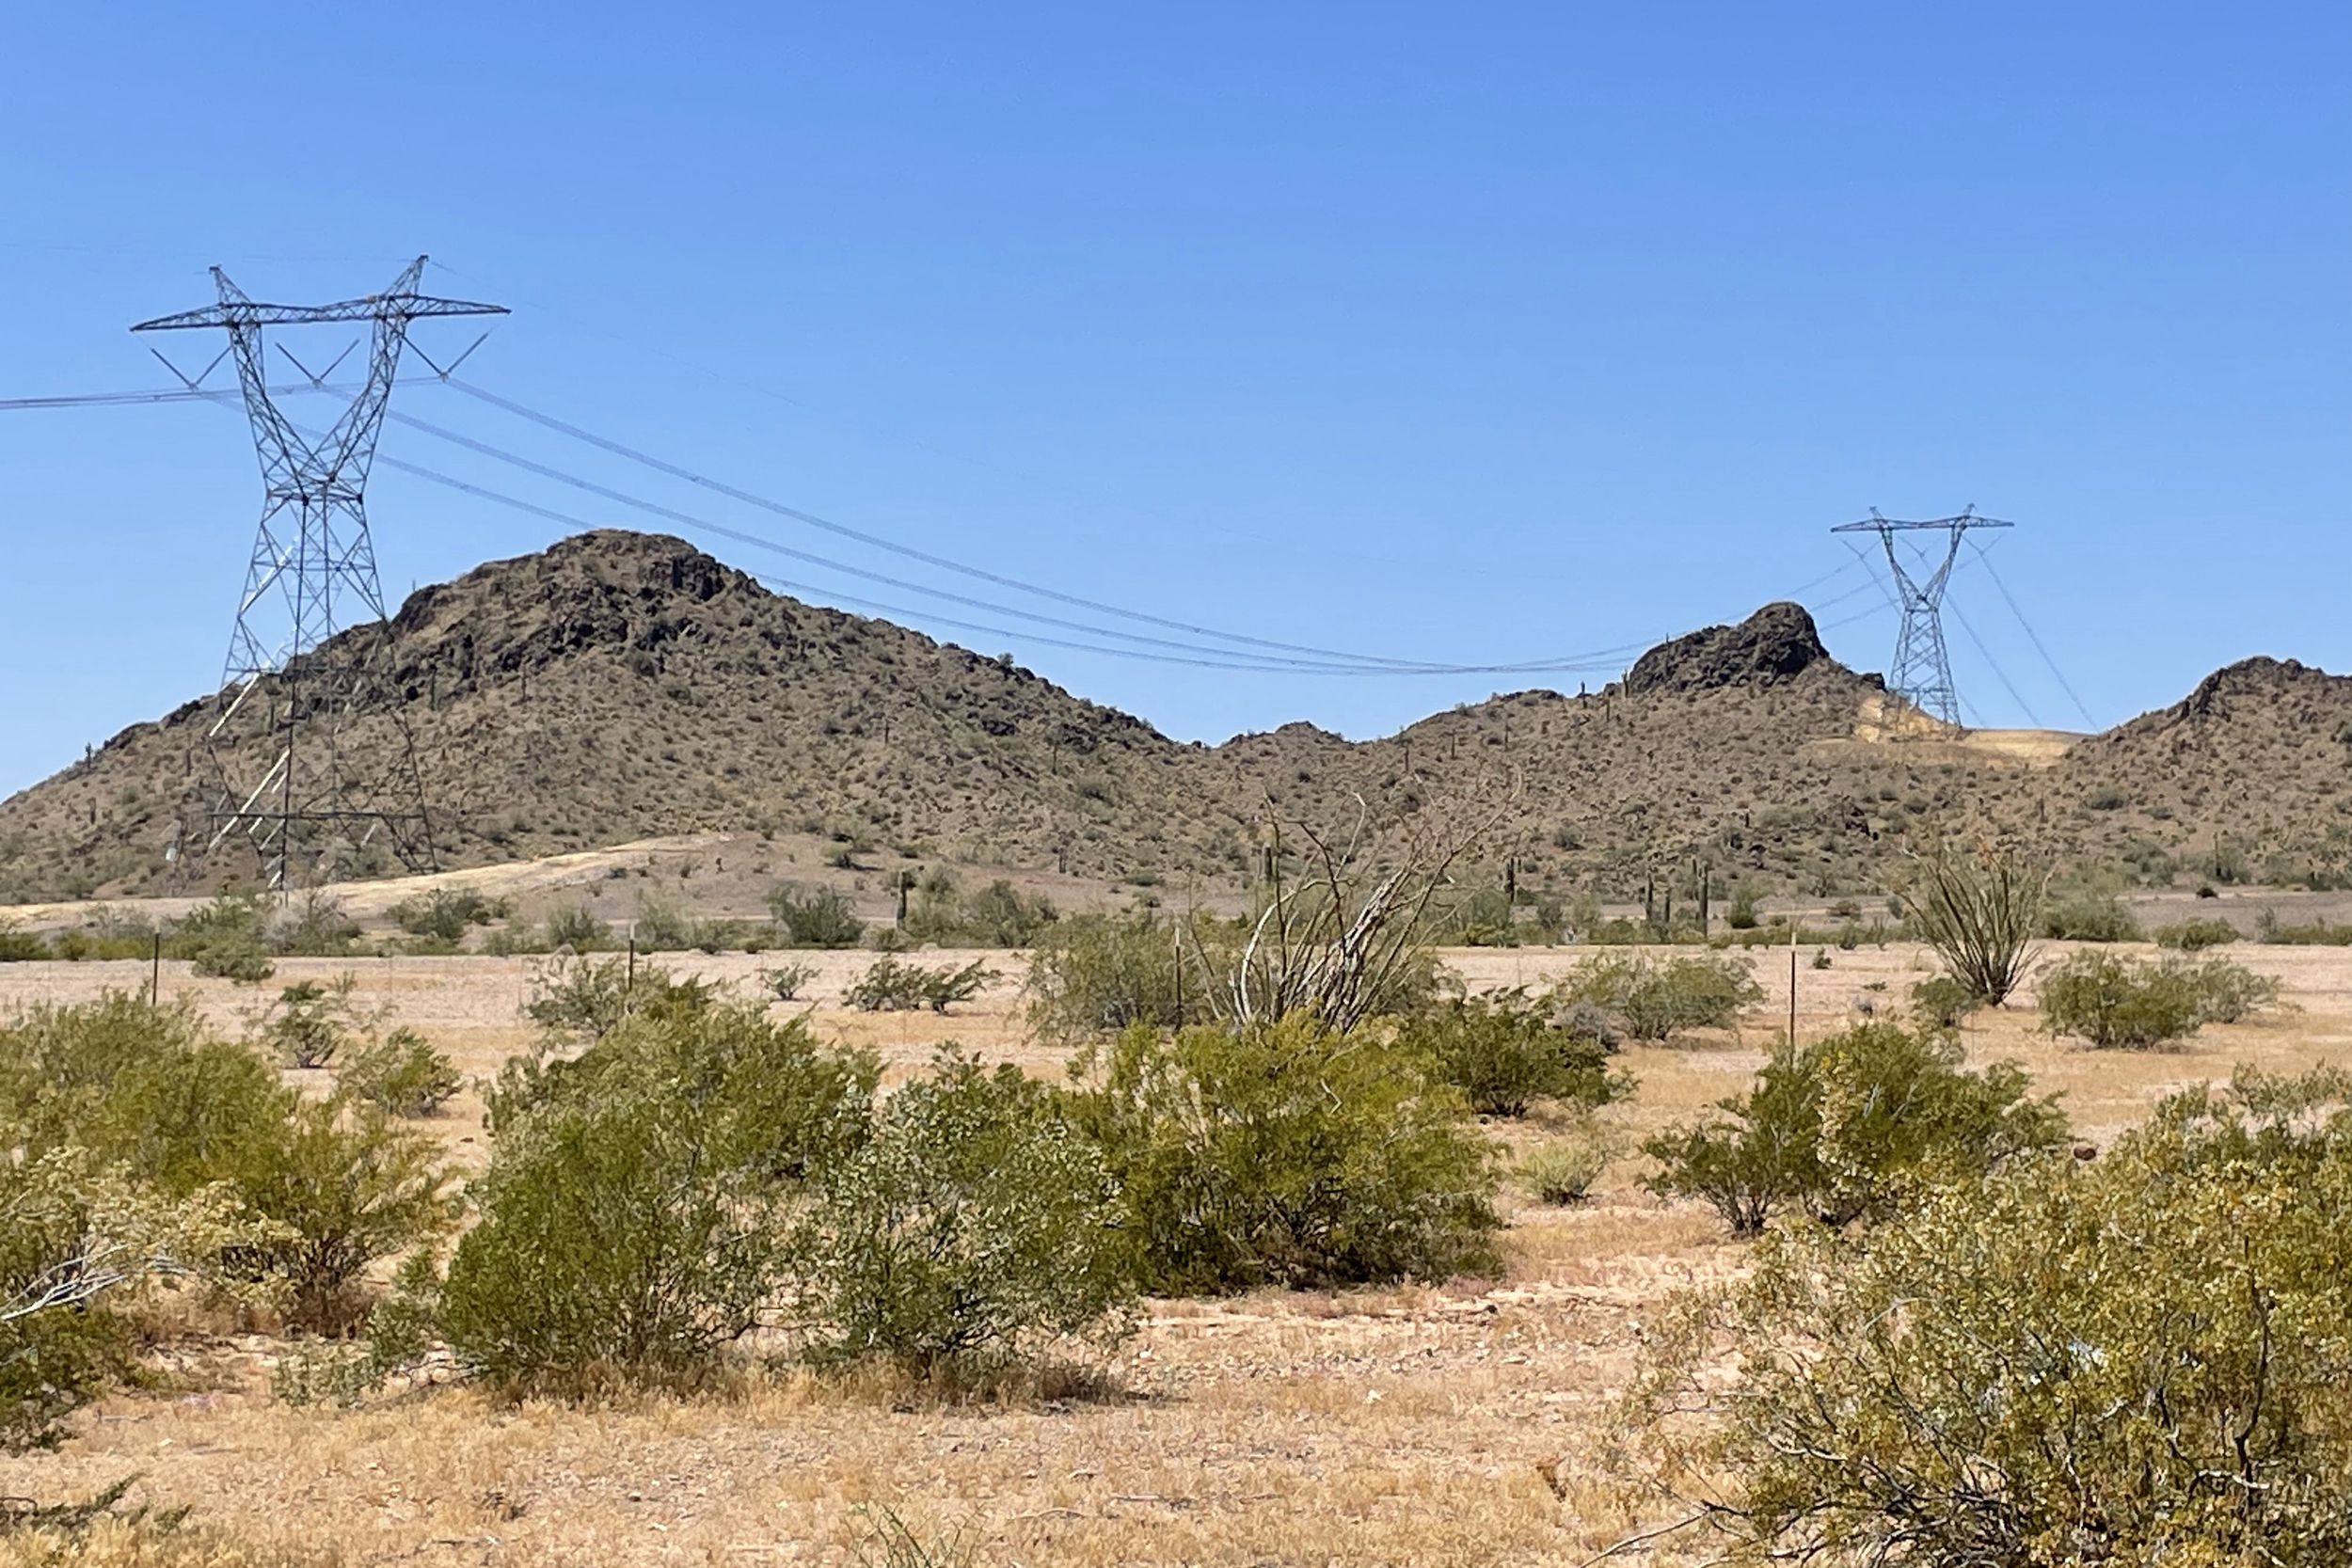 The Ten West Link transmission line spans 125 miles, beginning near Tonopah, Ariz. and ending near Blythe, Calif. Credit: Noel Lyn Smith/Inside Climate News